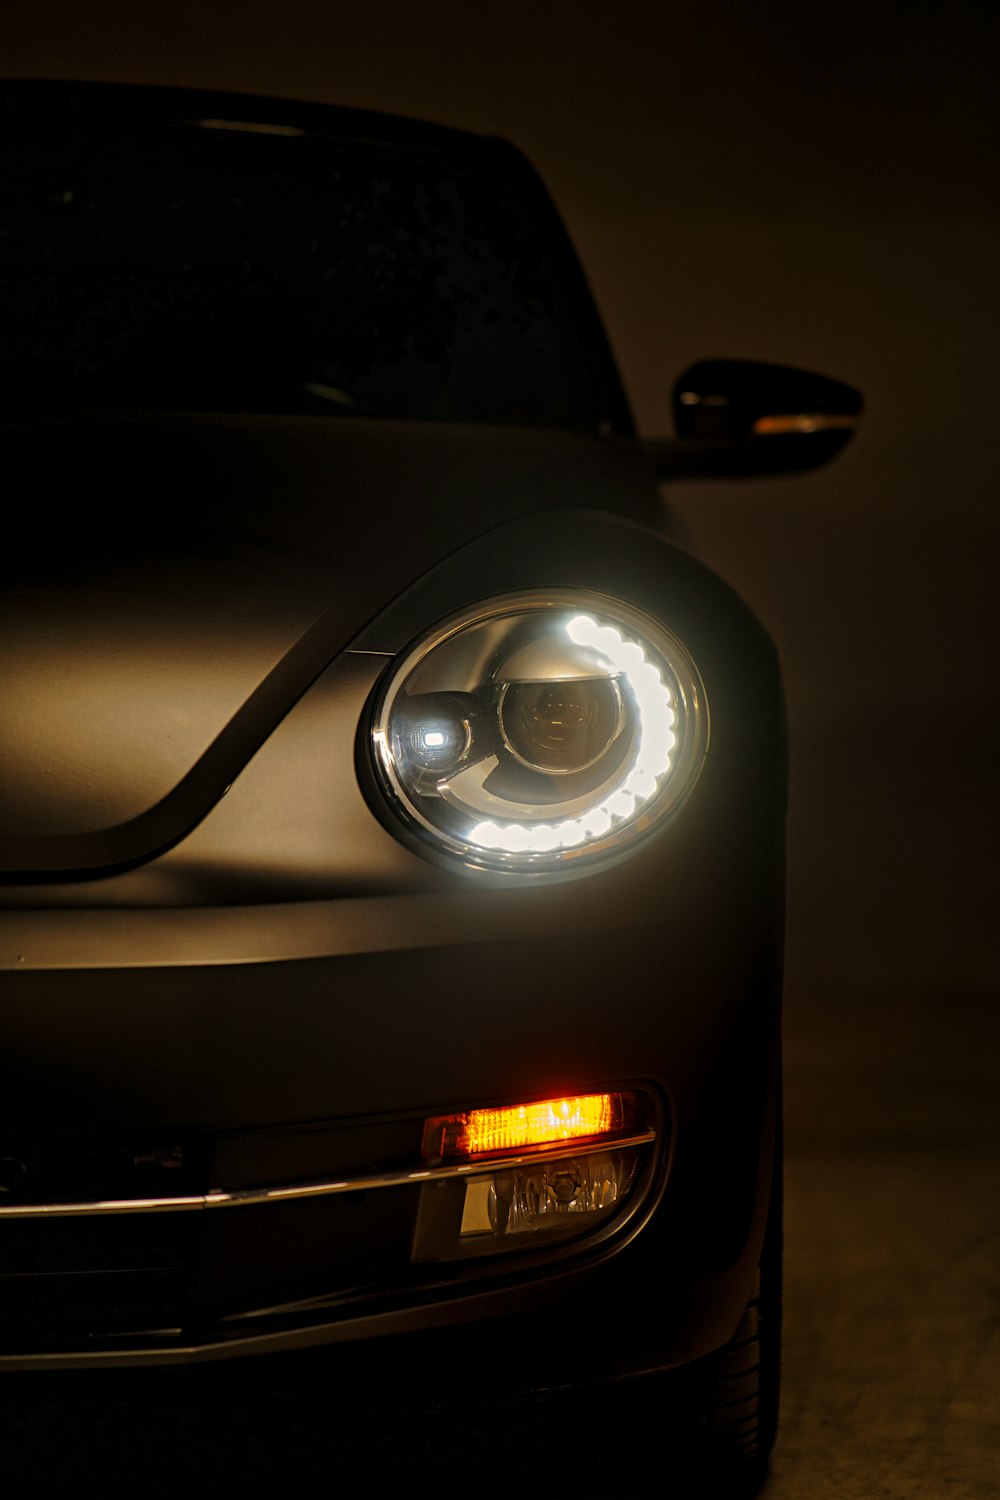 a close up of a car's headlight in the dark